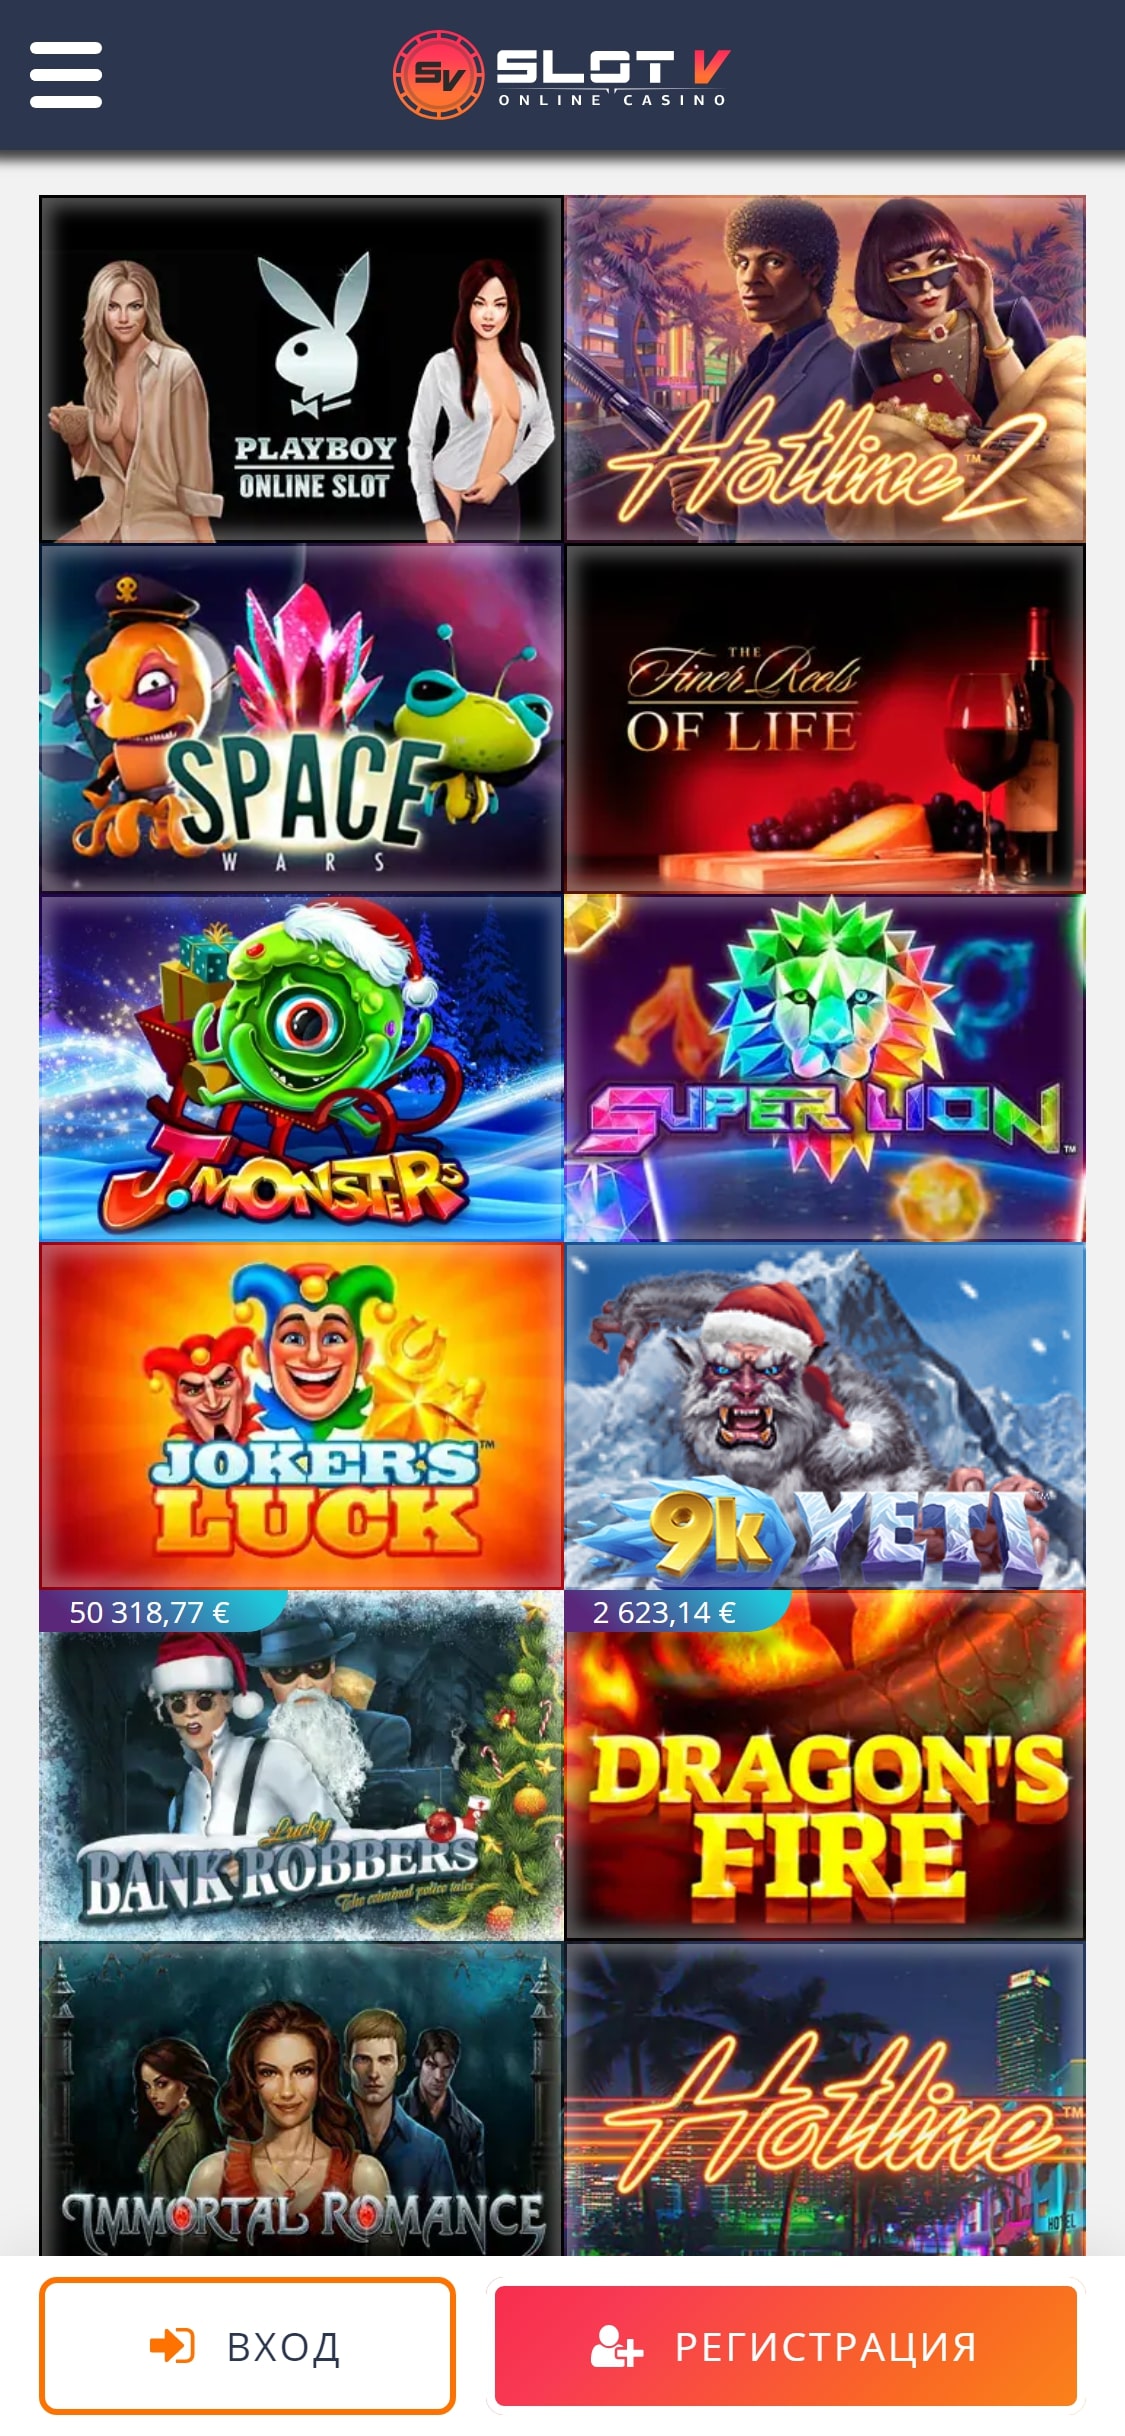 SlotV Casino Mobile Games Review